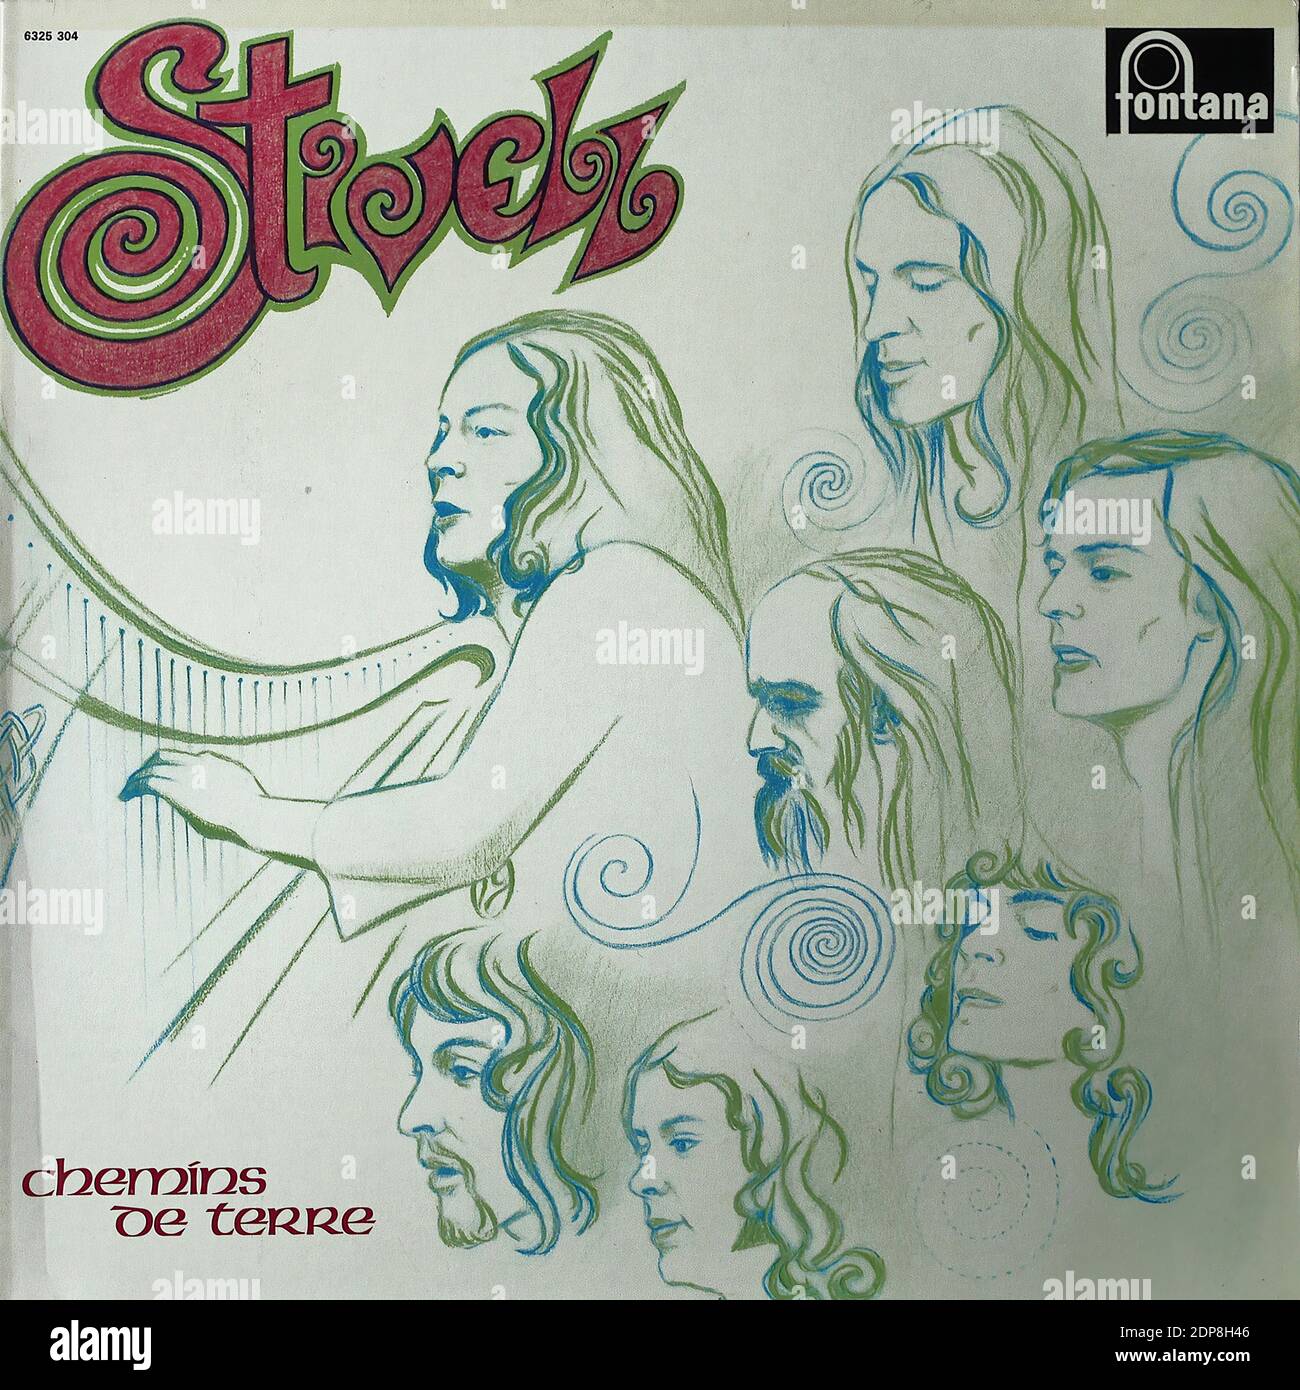 Alan Stivell – Chemins De Terre, Fontana 6325 304 - Vintage Vinyl Album Cover Stockfoto